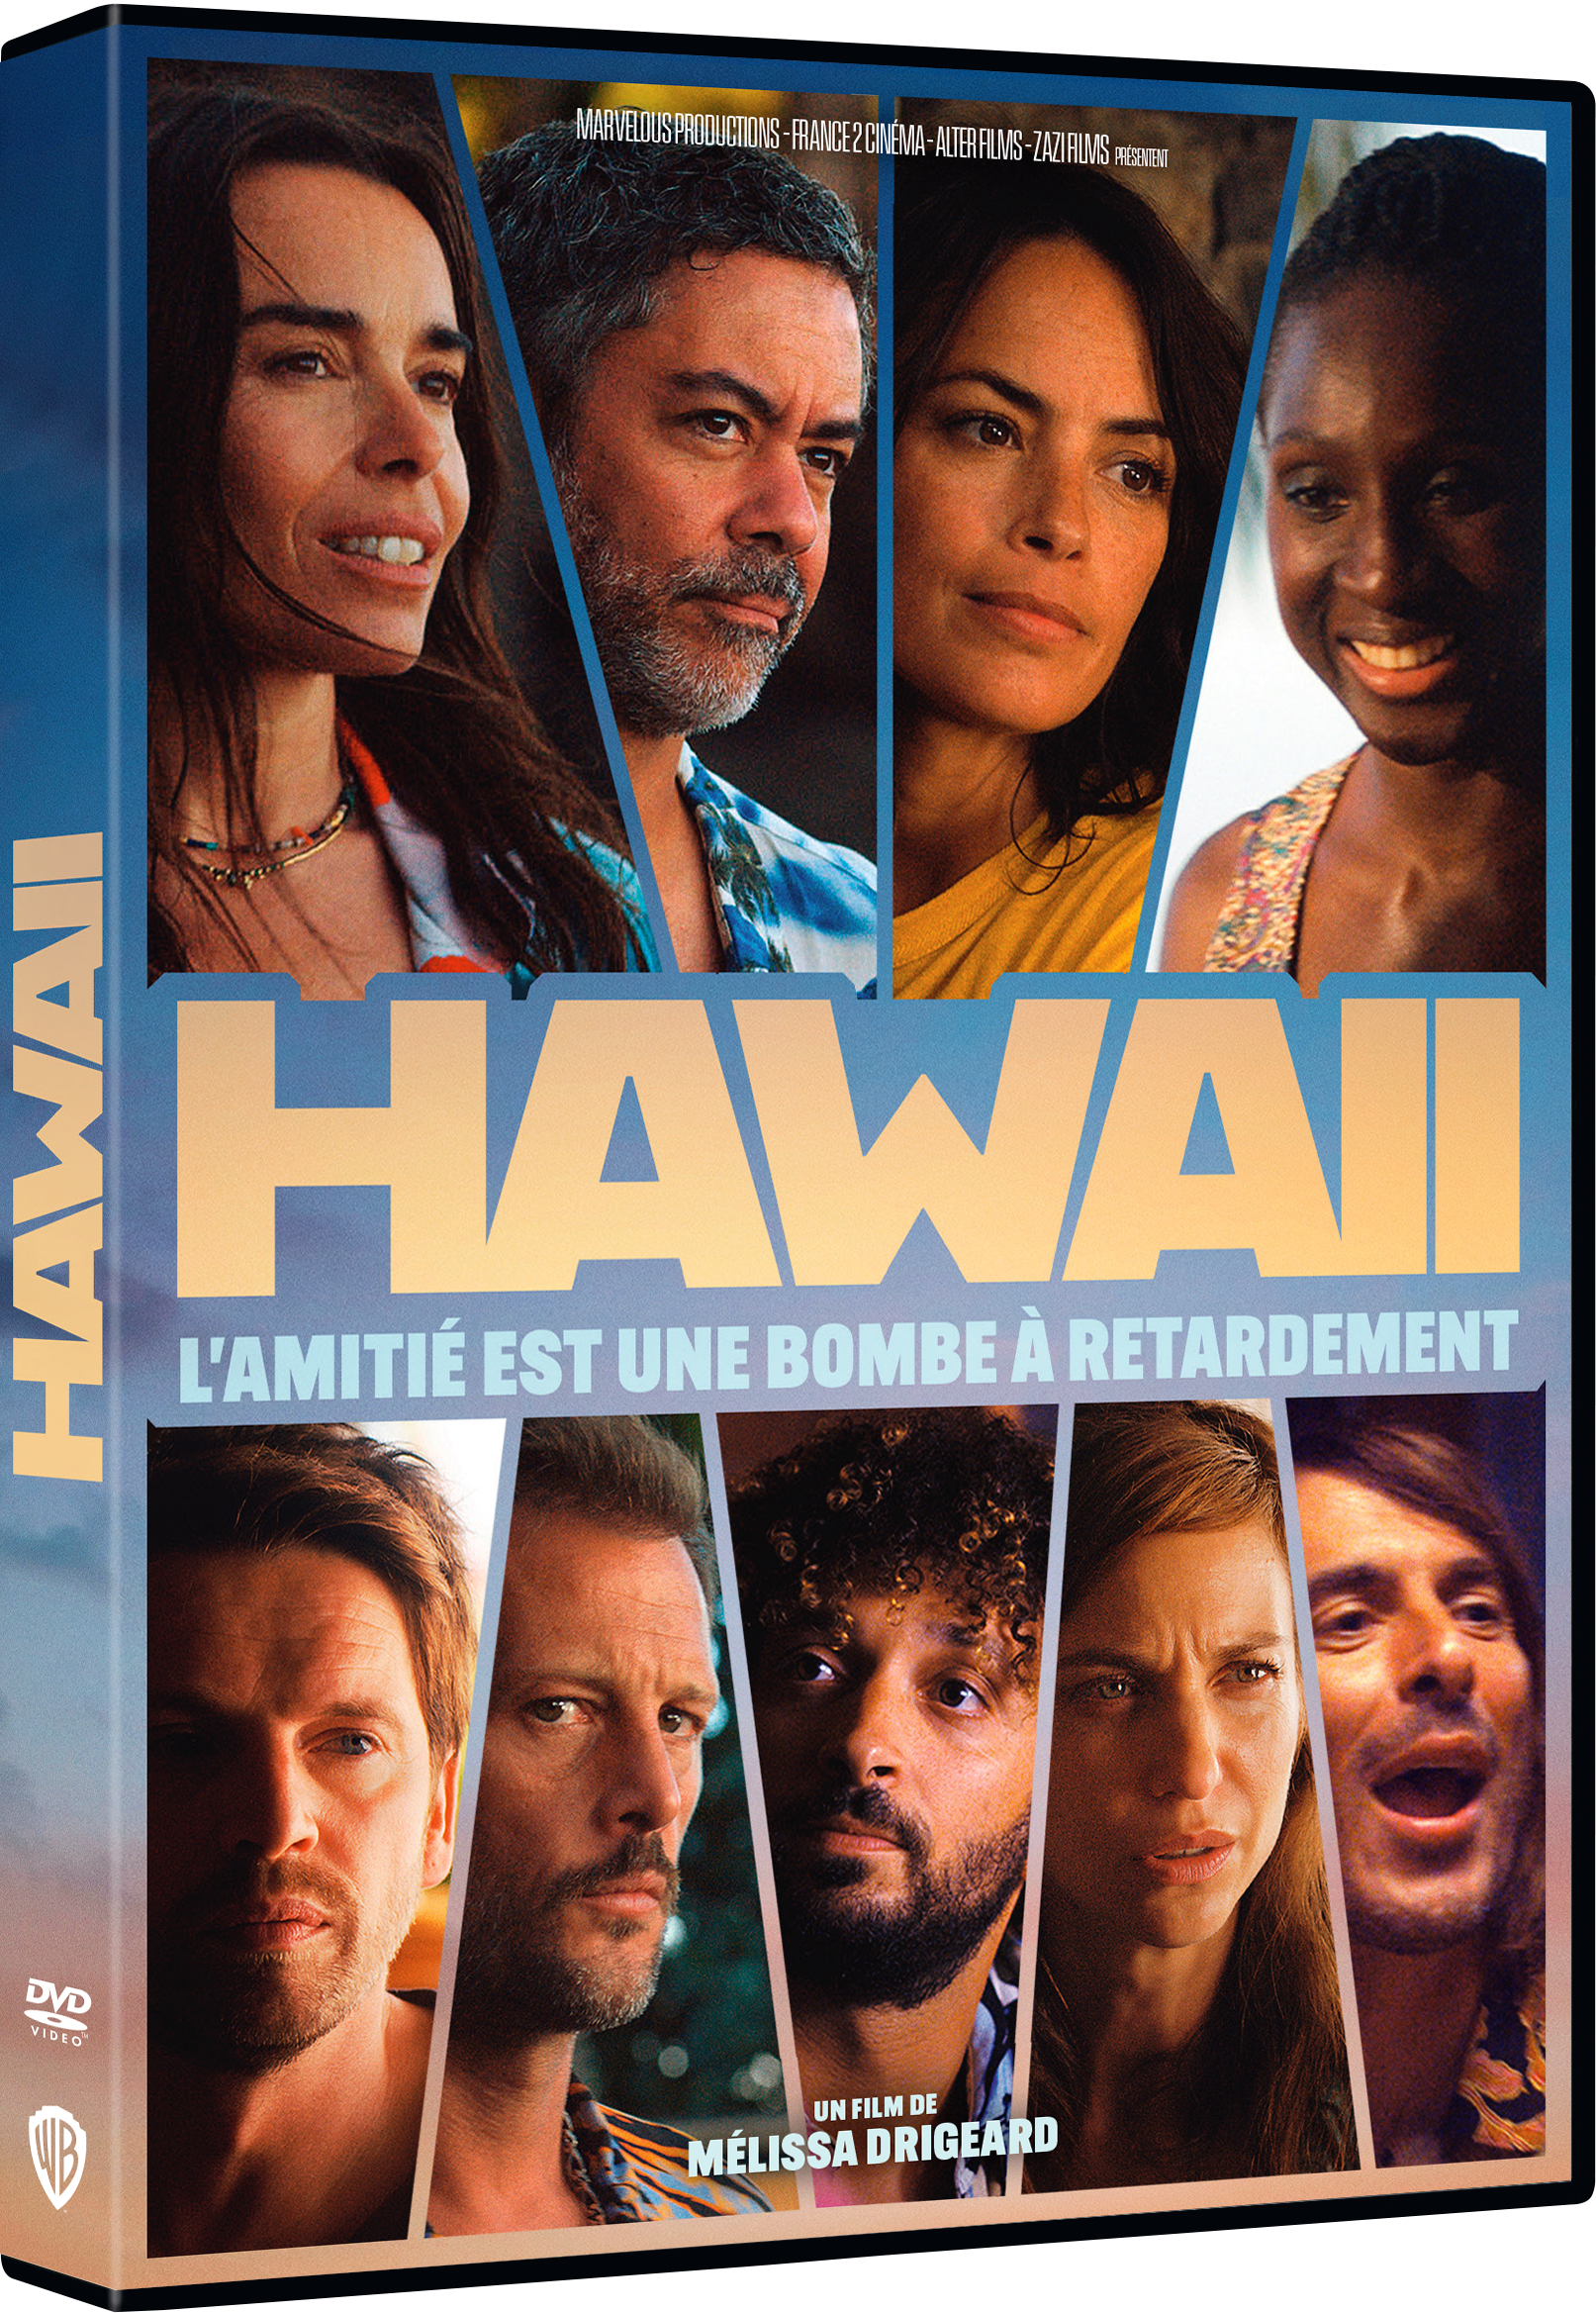 Hawaï en DVD, EST et VOD